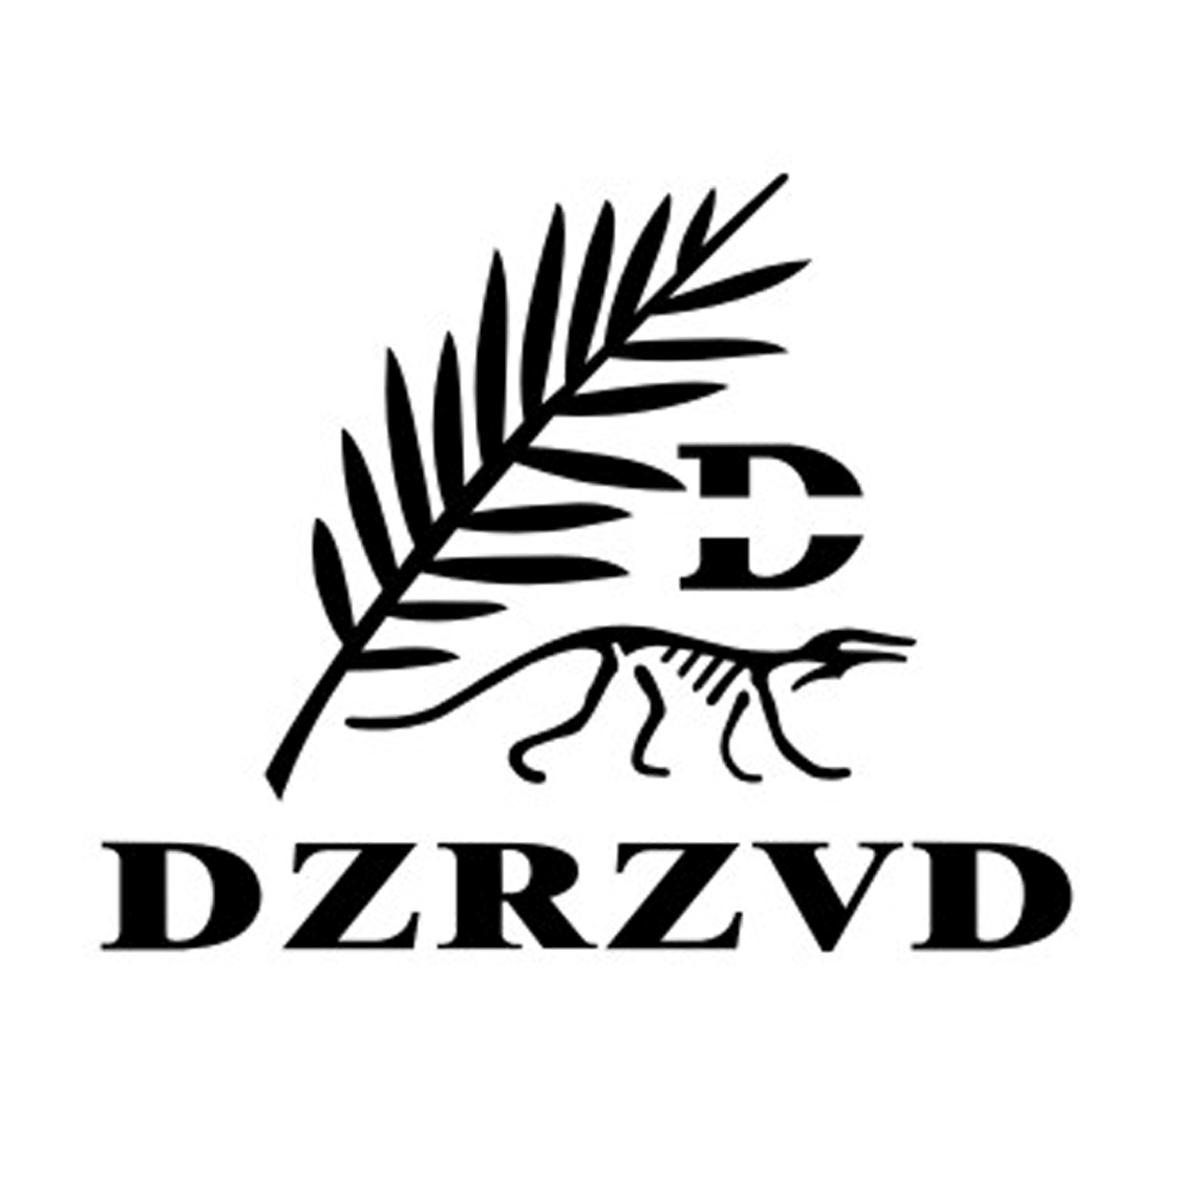 DZRZVDD矿灯商标转让费用买卖交易流程